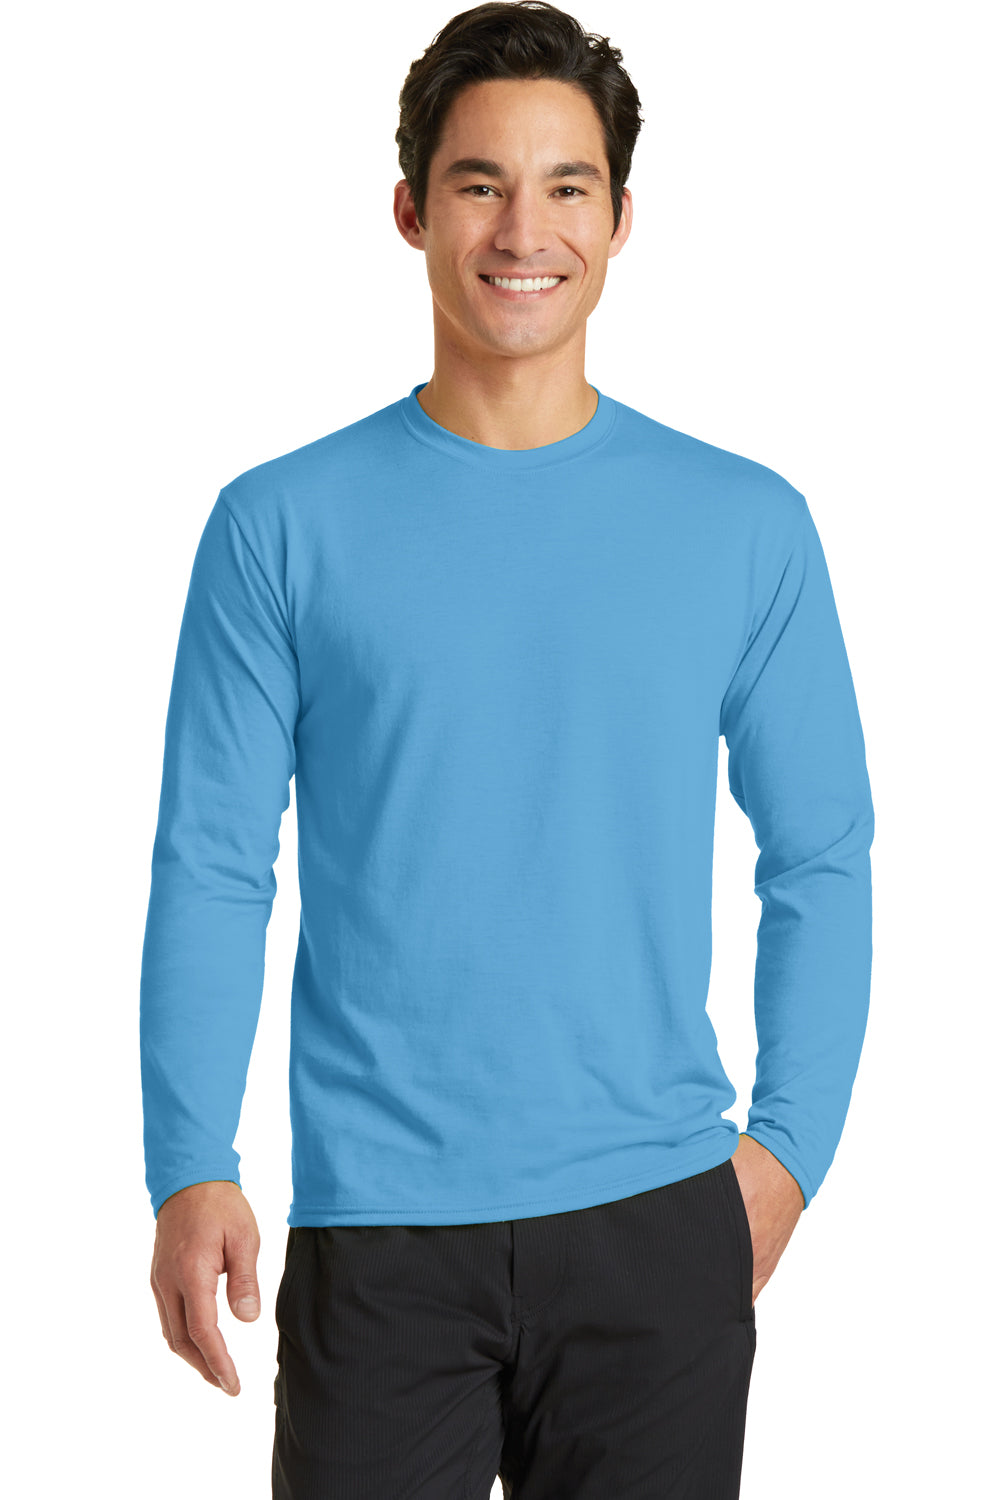 Port & Company PC381LS Mens Dry Zone Performance Moisture Wicking Long Sleeve Crewneck T-Shirt Aqua Blue Front